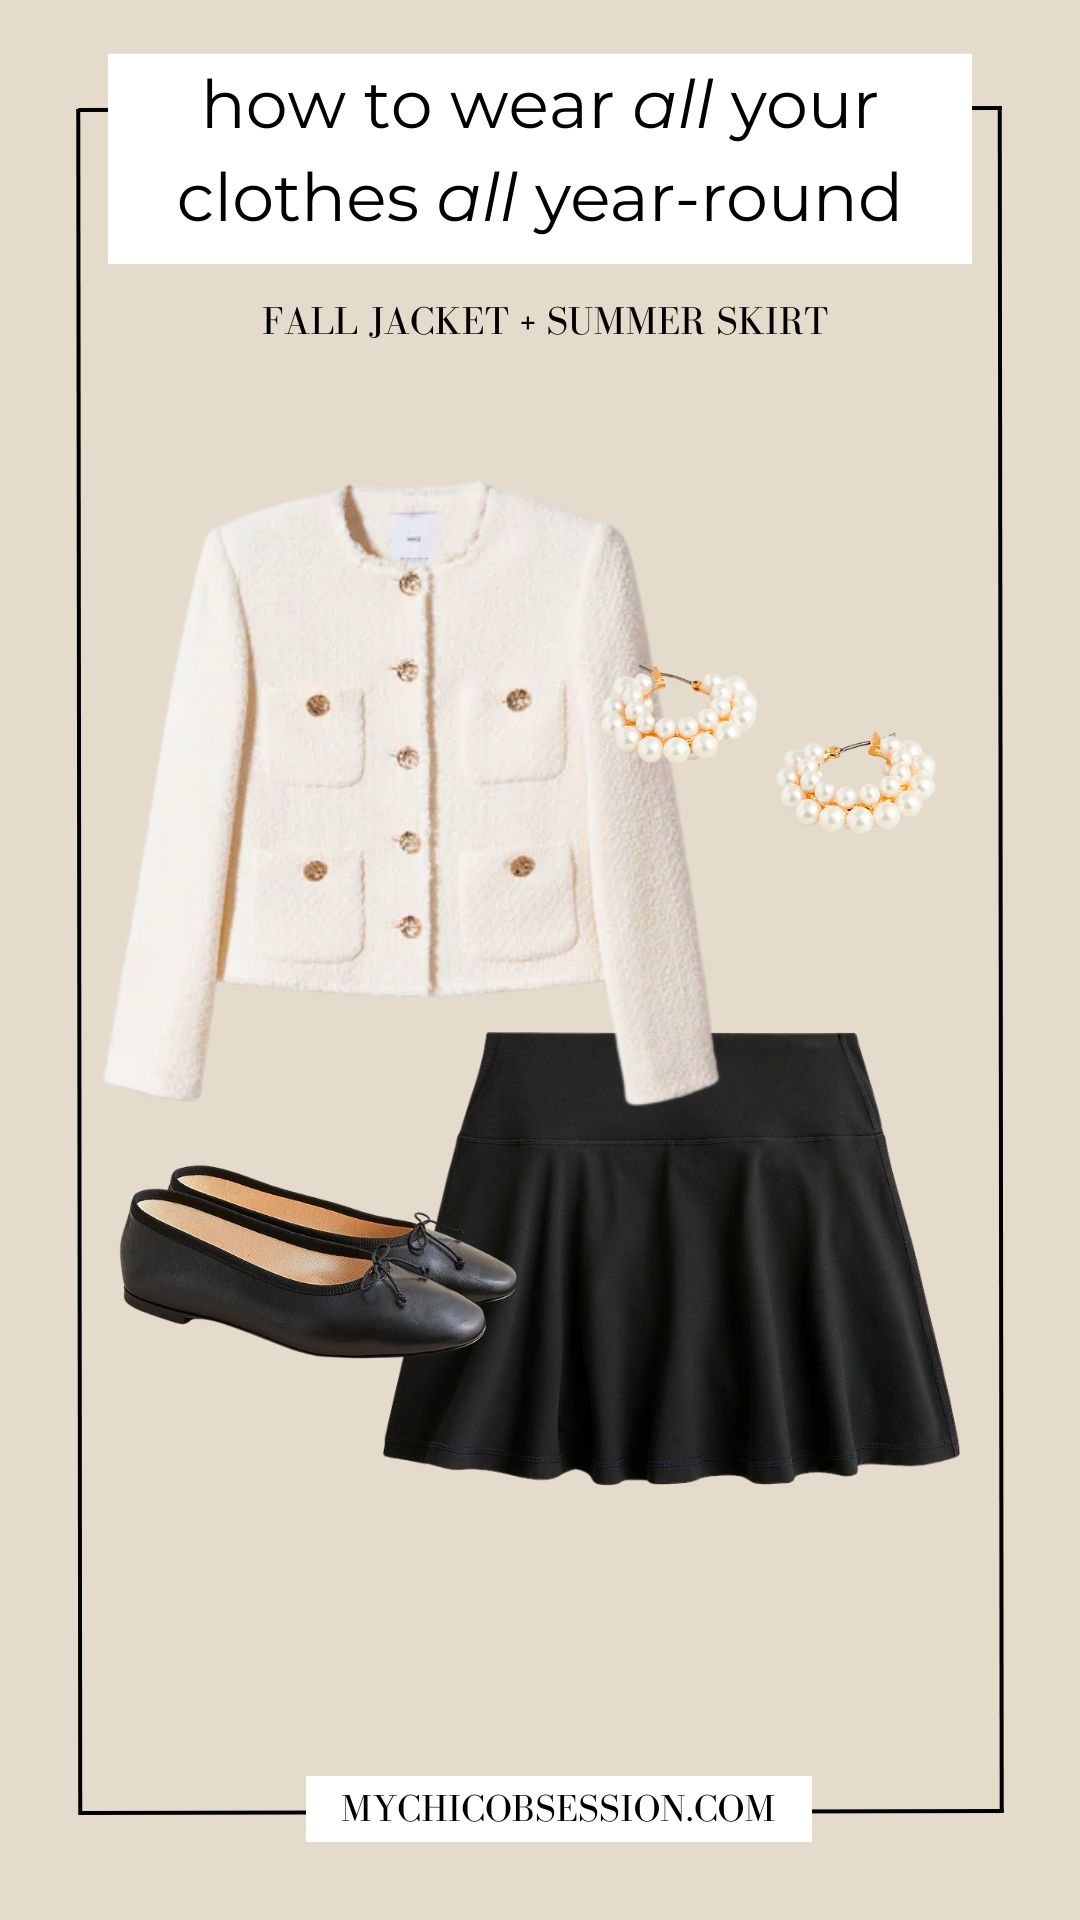 tweed blazer with tennis skirt